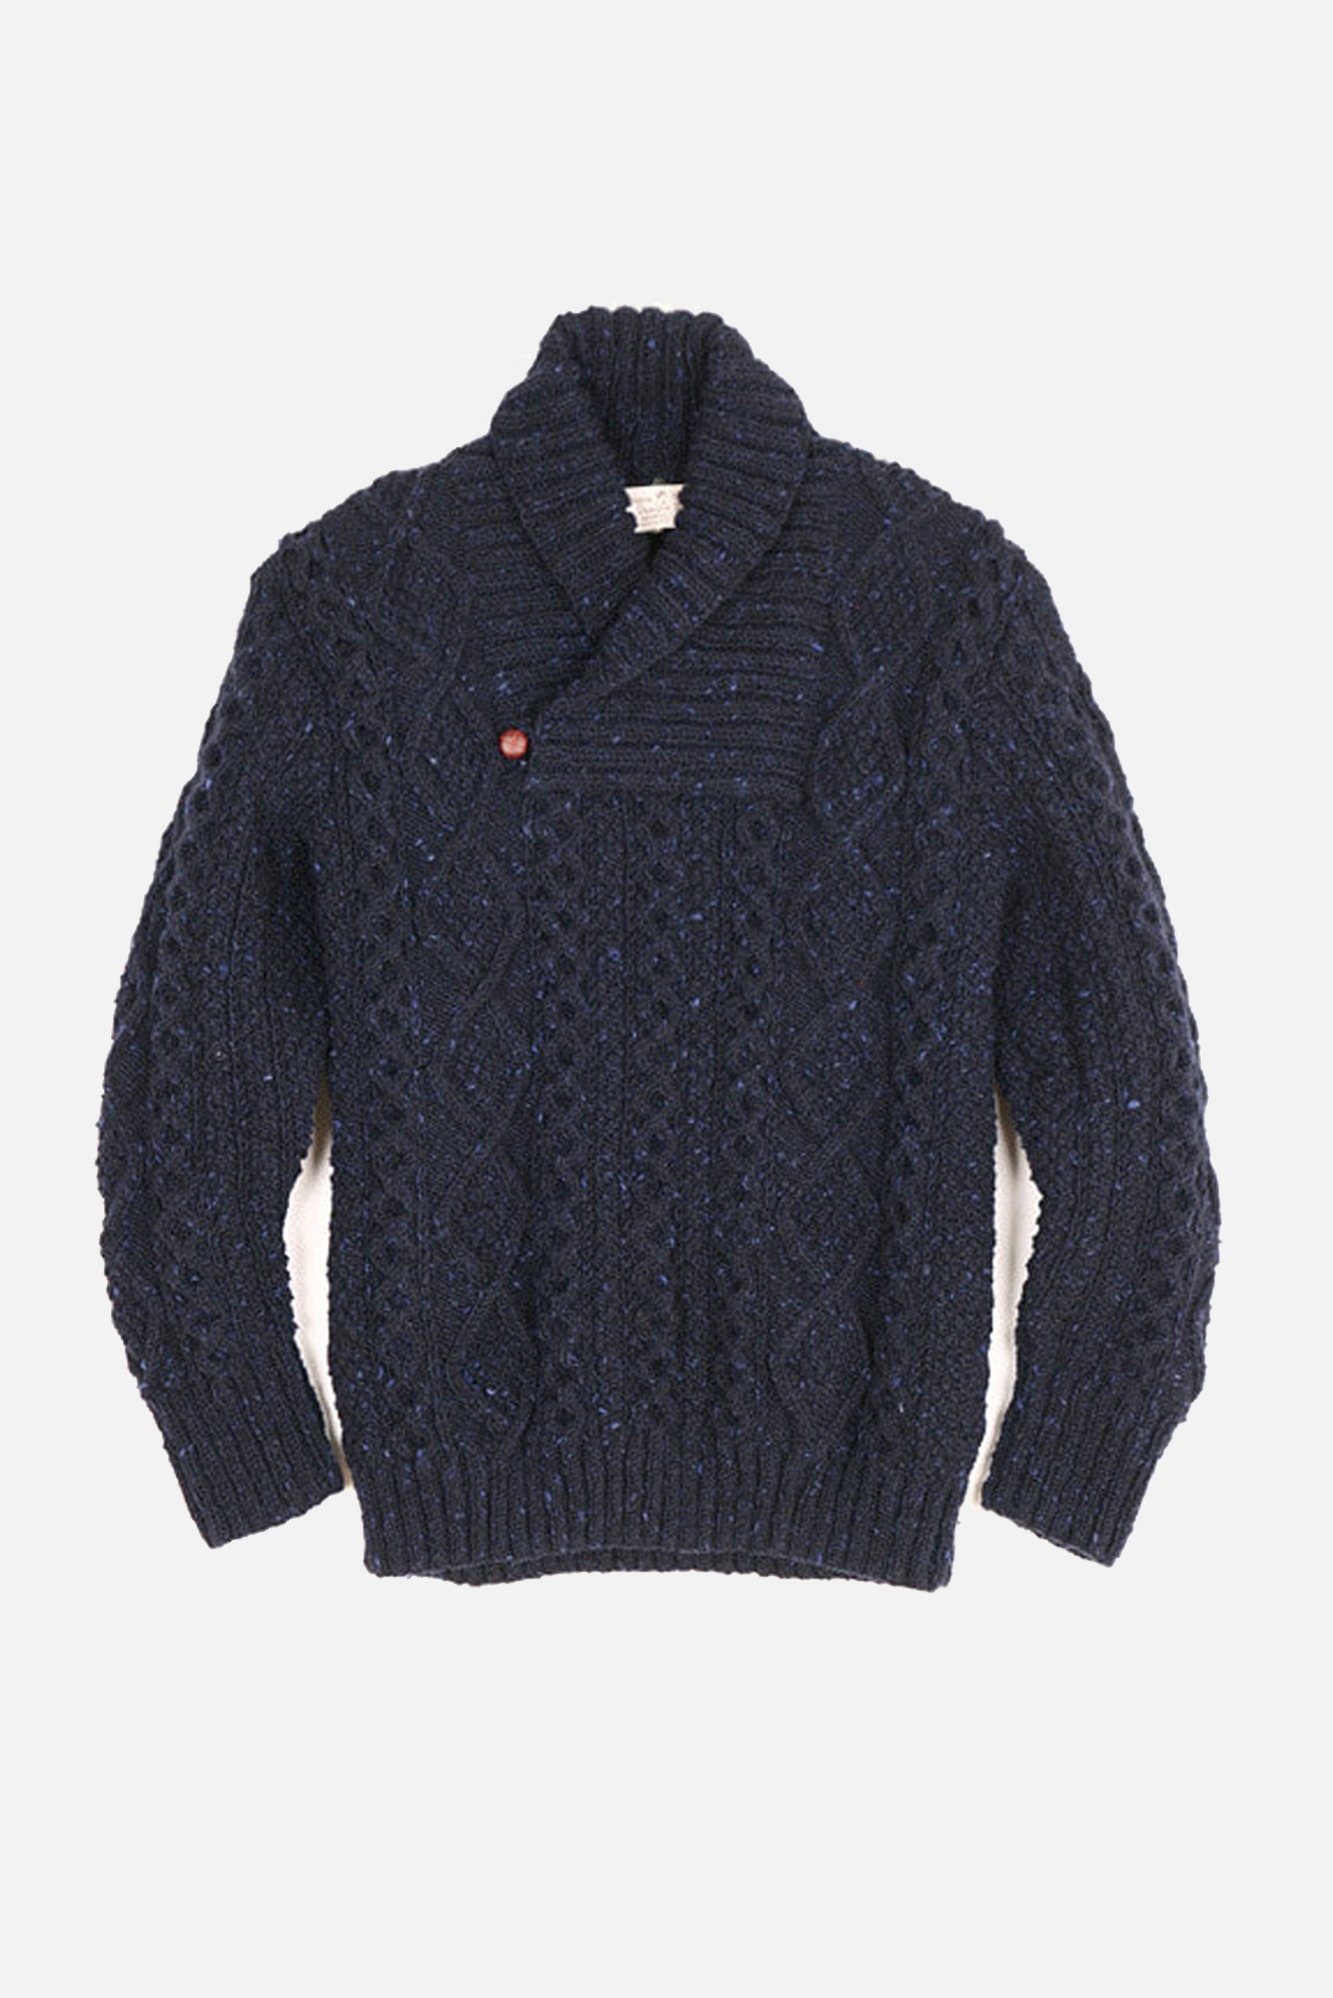 ATHENA DESIGNS Aran Hand Knit Shawl Collar Pollover Sweater Navy Mix